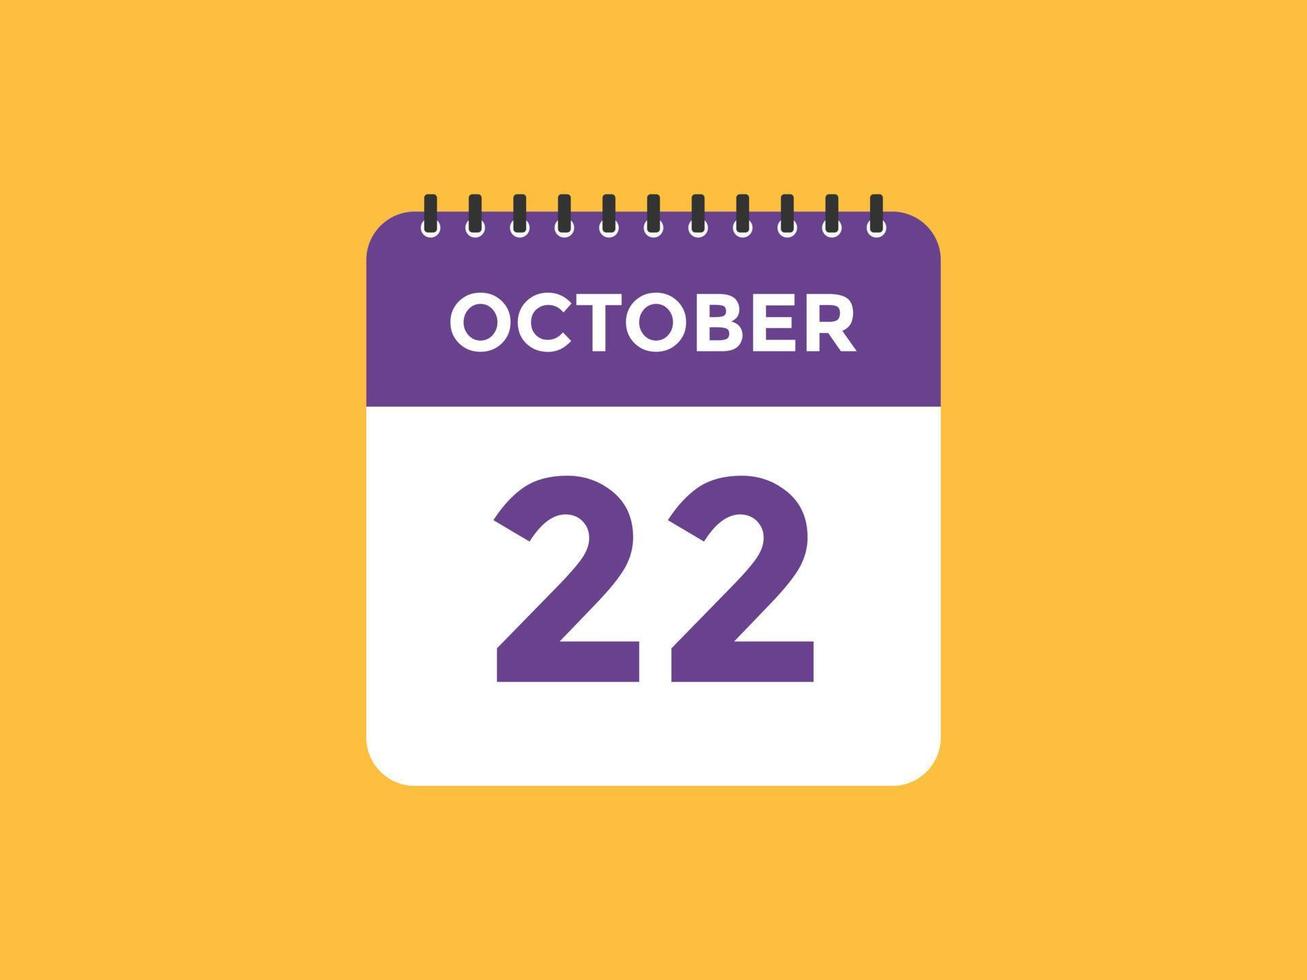 october 22 calendar reminder. 22th october daily calendar icon template. Calendar 22th october icon Design template. Vector illustration